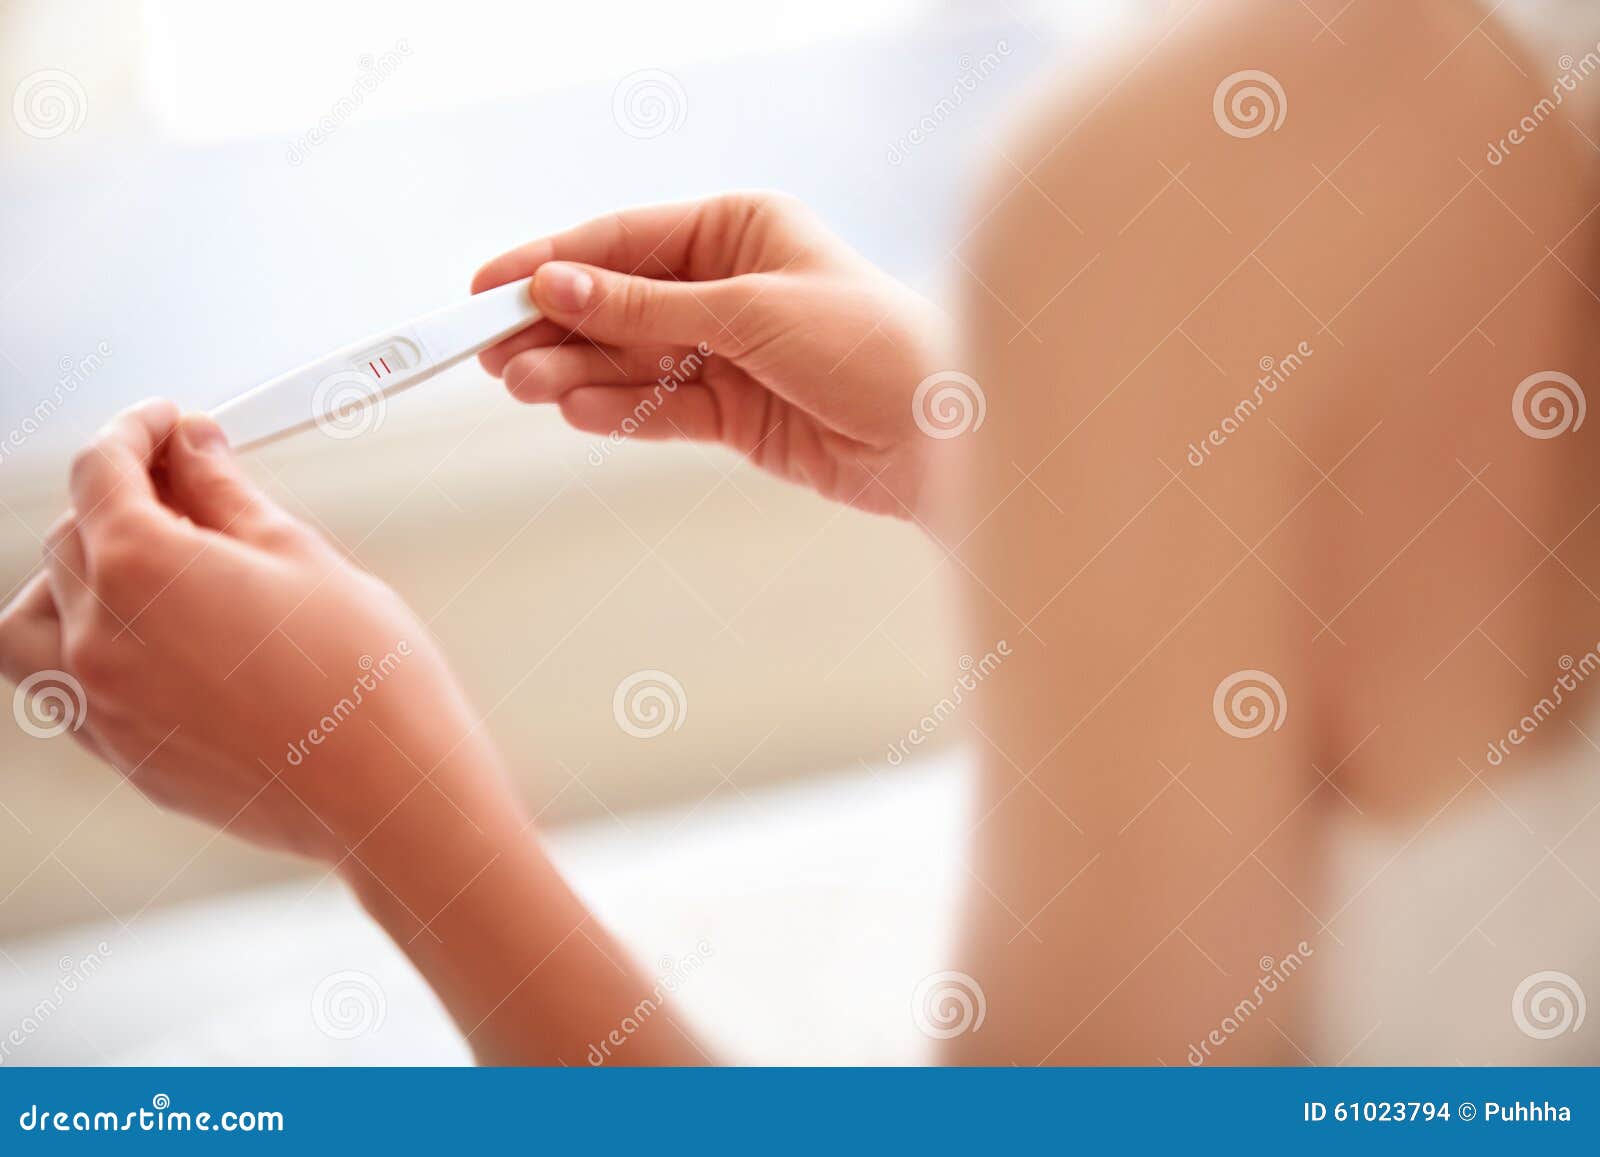 woman holding pregnancy test. pregnant